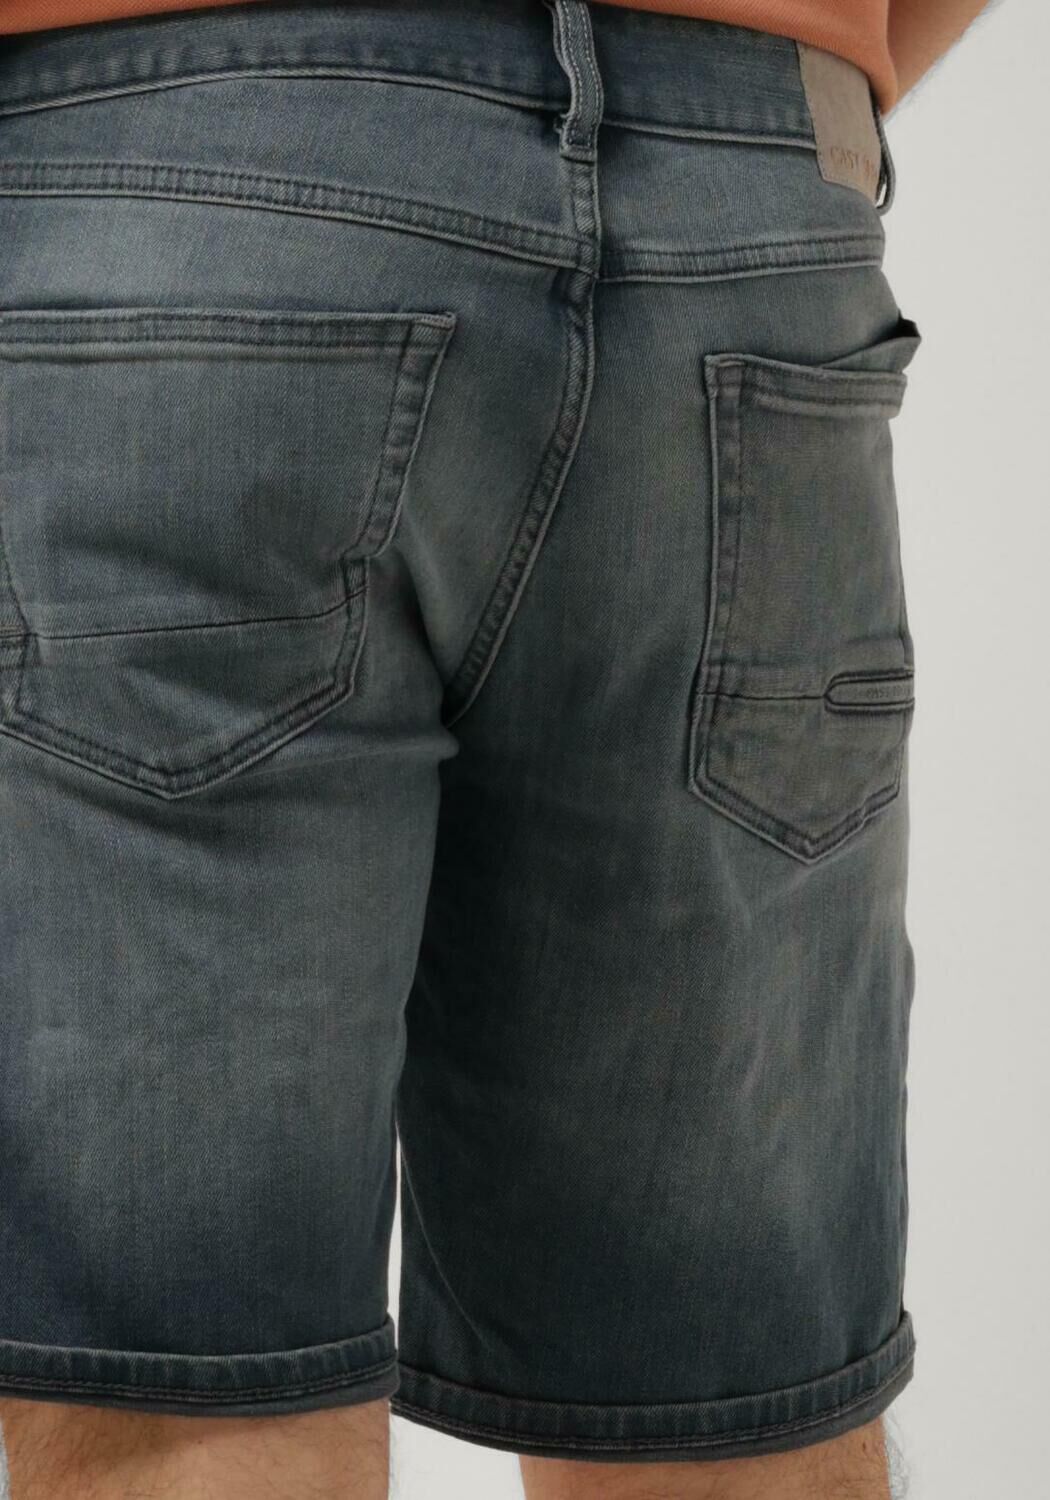 CAST IRON Heren Jeans Shiftback Shorts True Blue Grey Donkergrijs